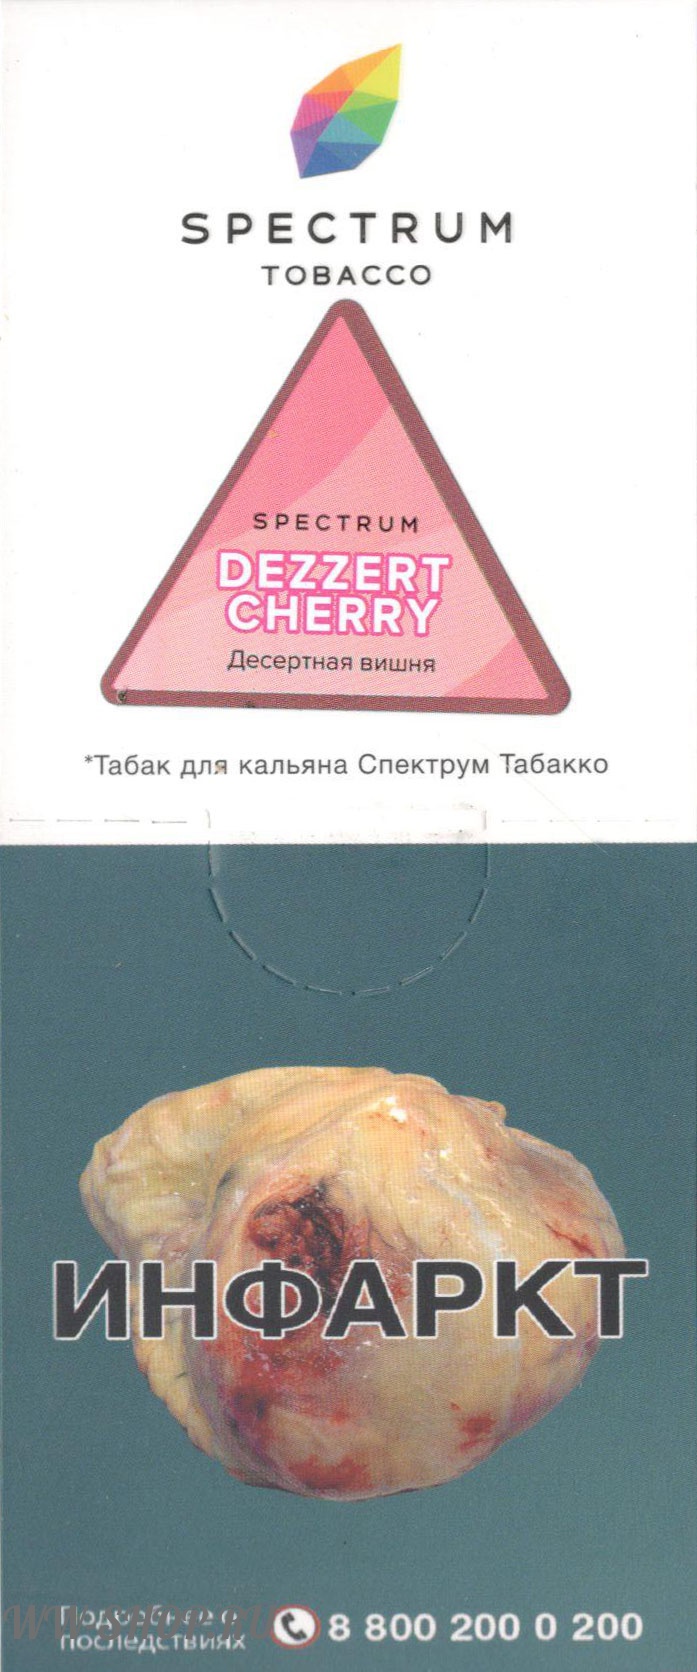 spectrum- десертная вишня (dezzert cherry) Чебоксары